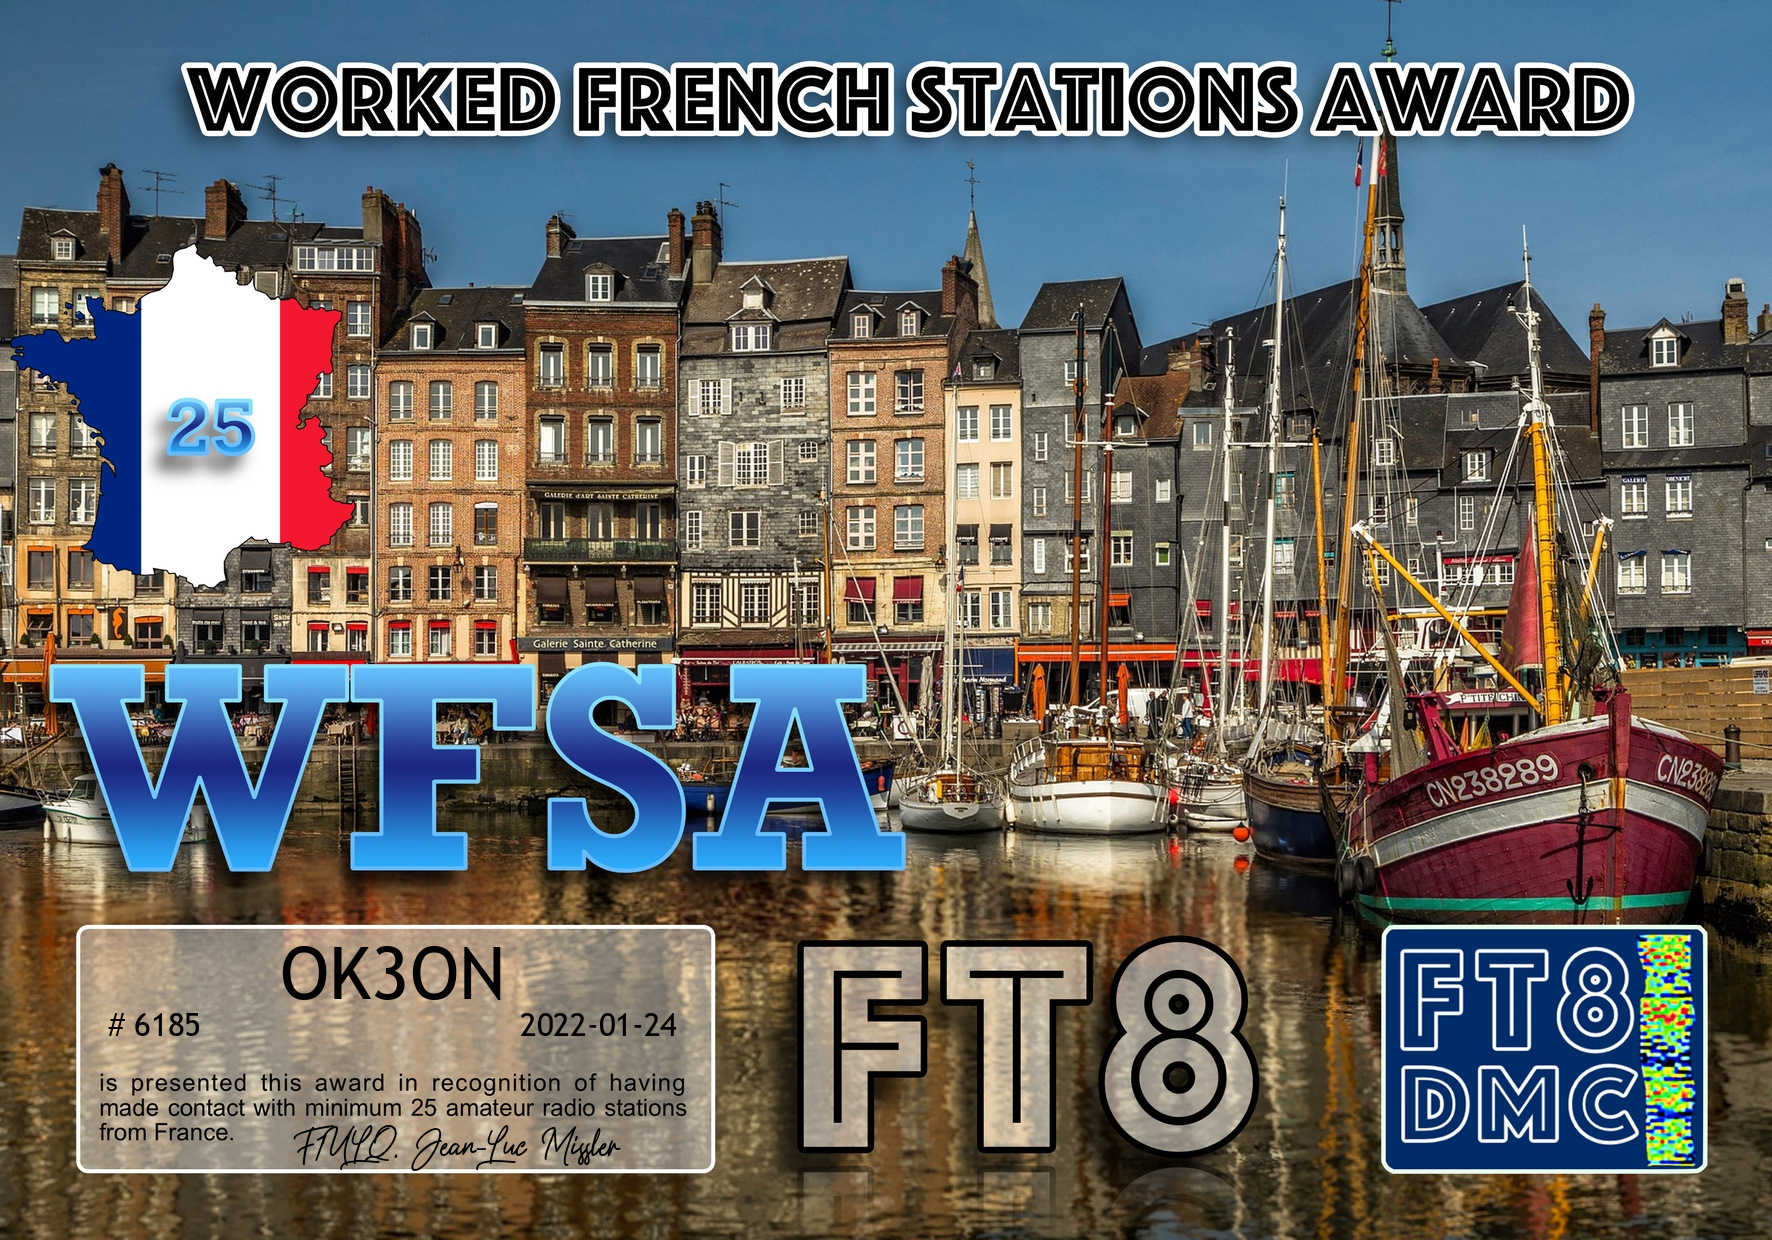 awards/OK3ON-WFSA-II_FT8DMC.jpg